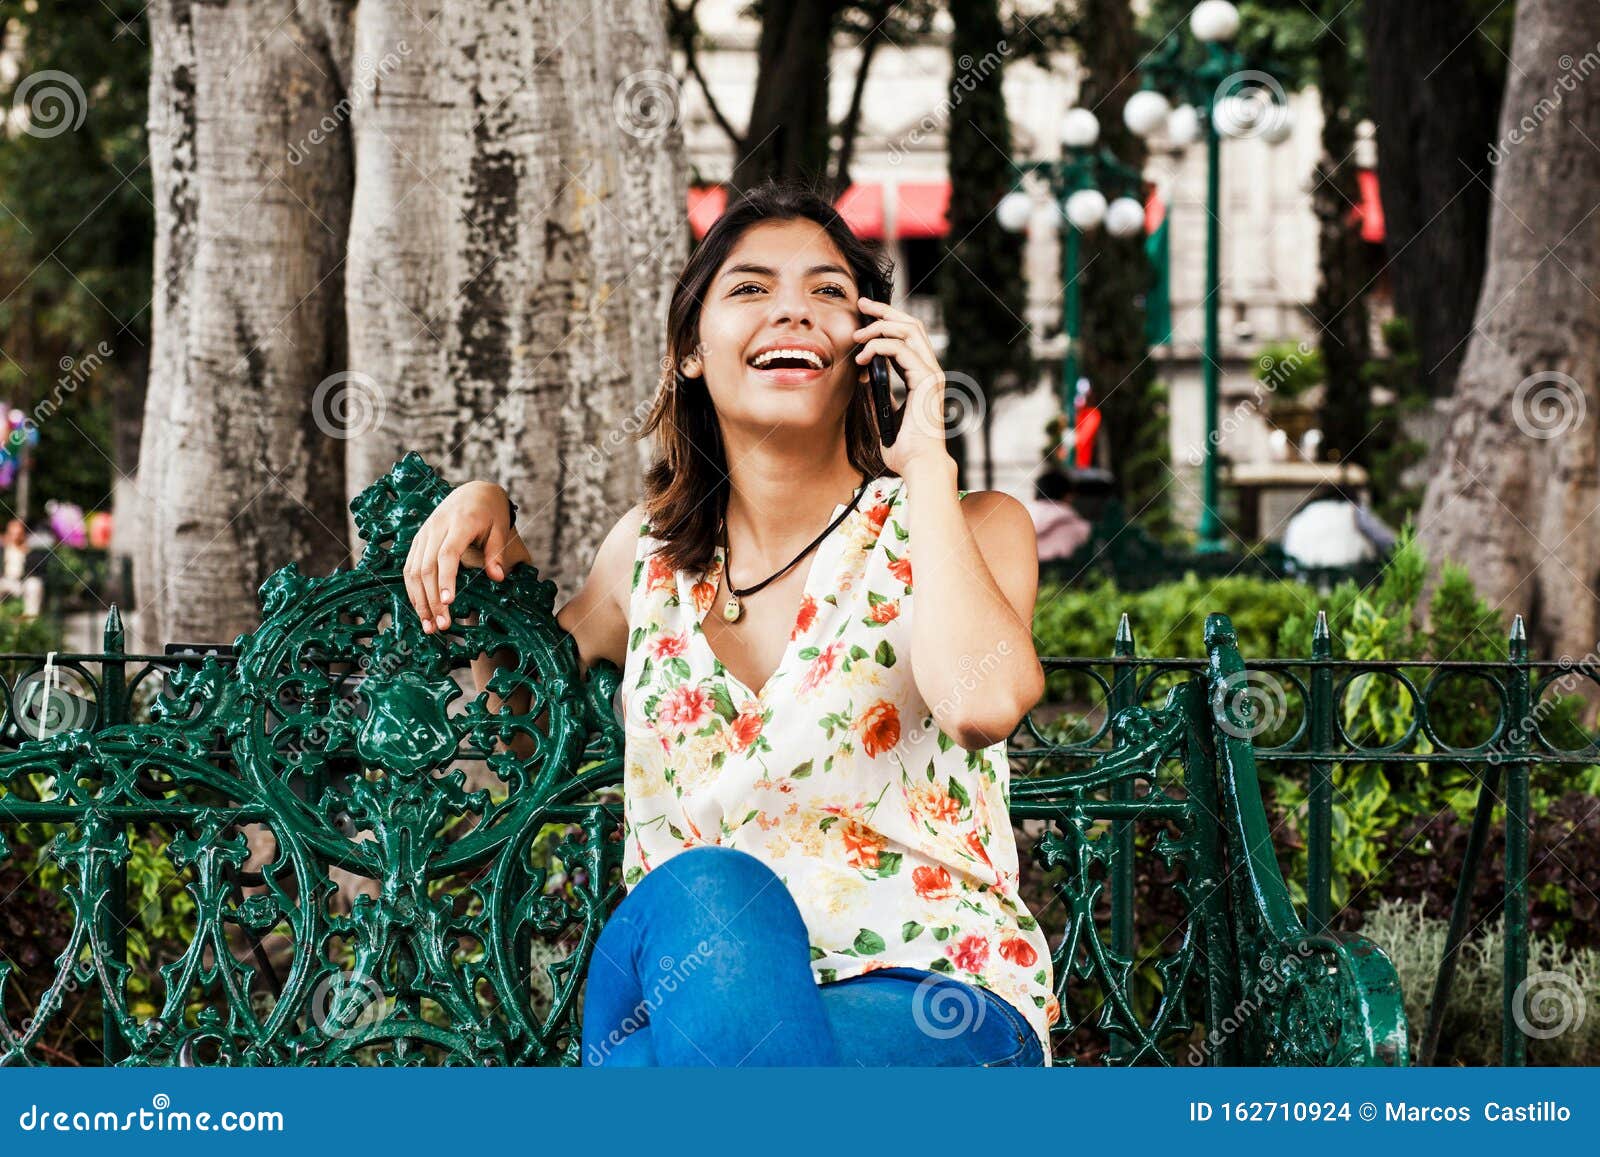 https://thumbs.dreamstime.com/z/mexican-woman-talking-mobile-phone-hispanic-beautiful-mexico-city-162710924.jpg